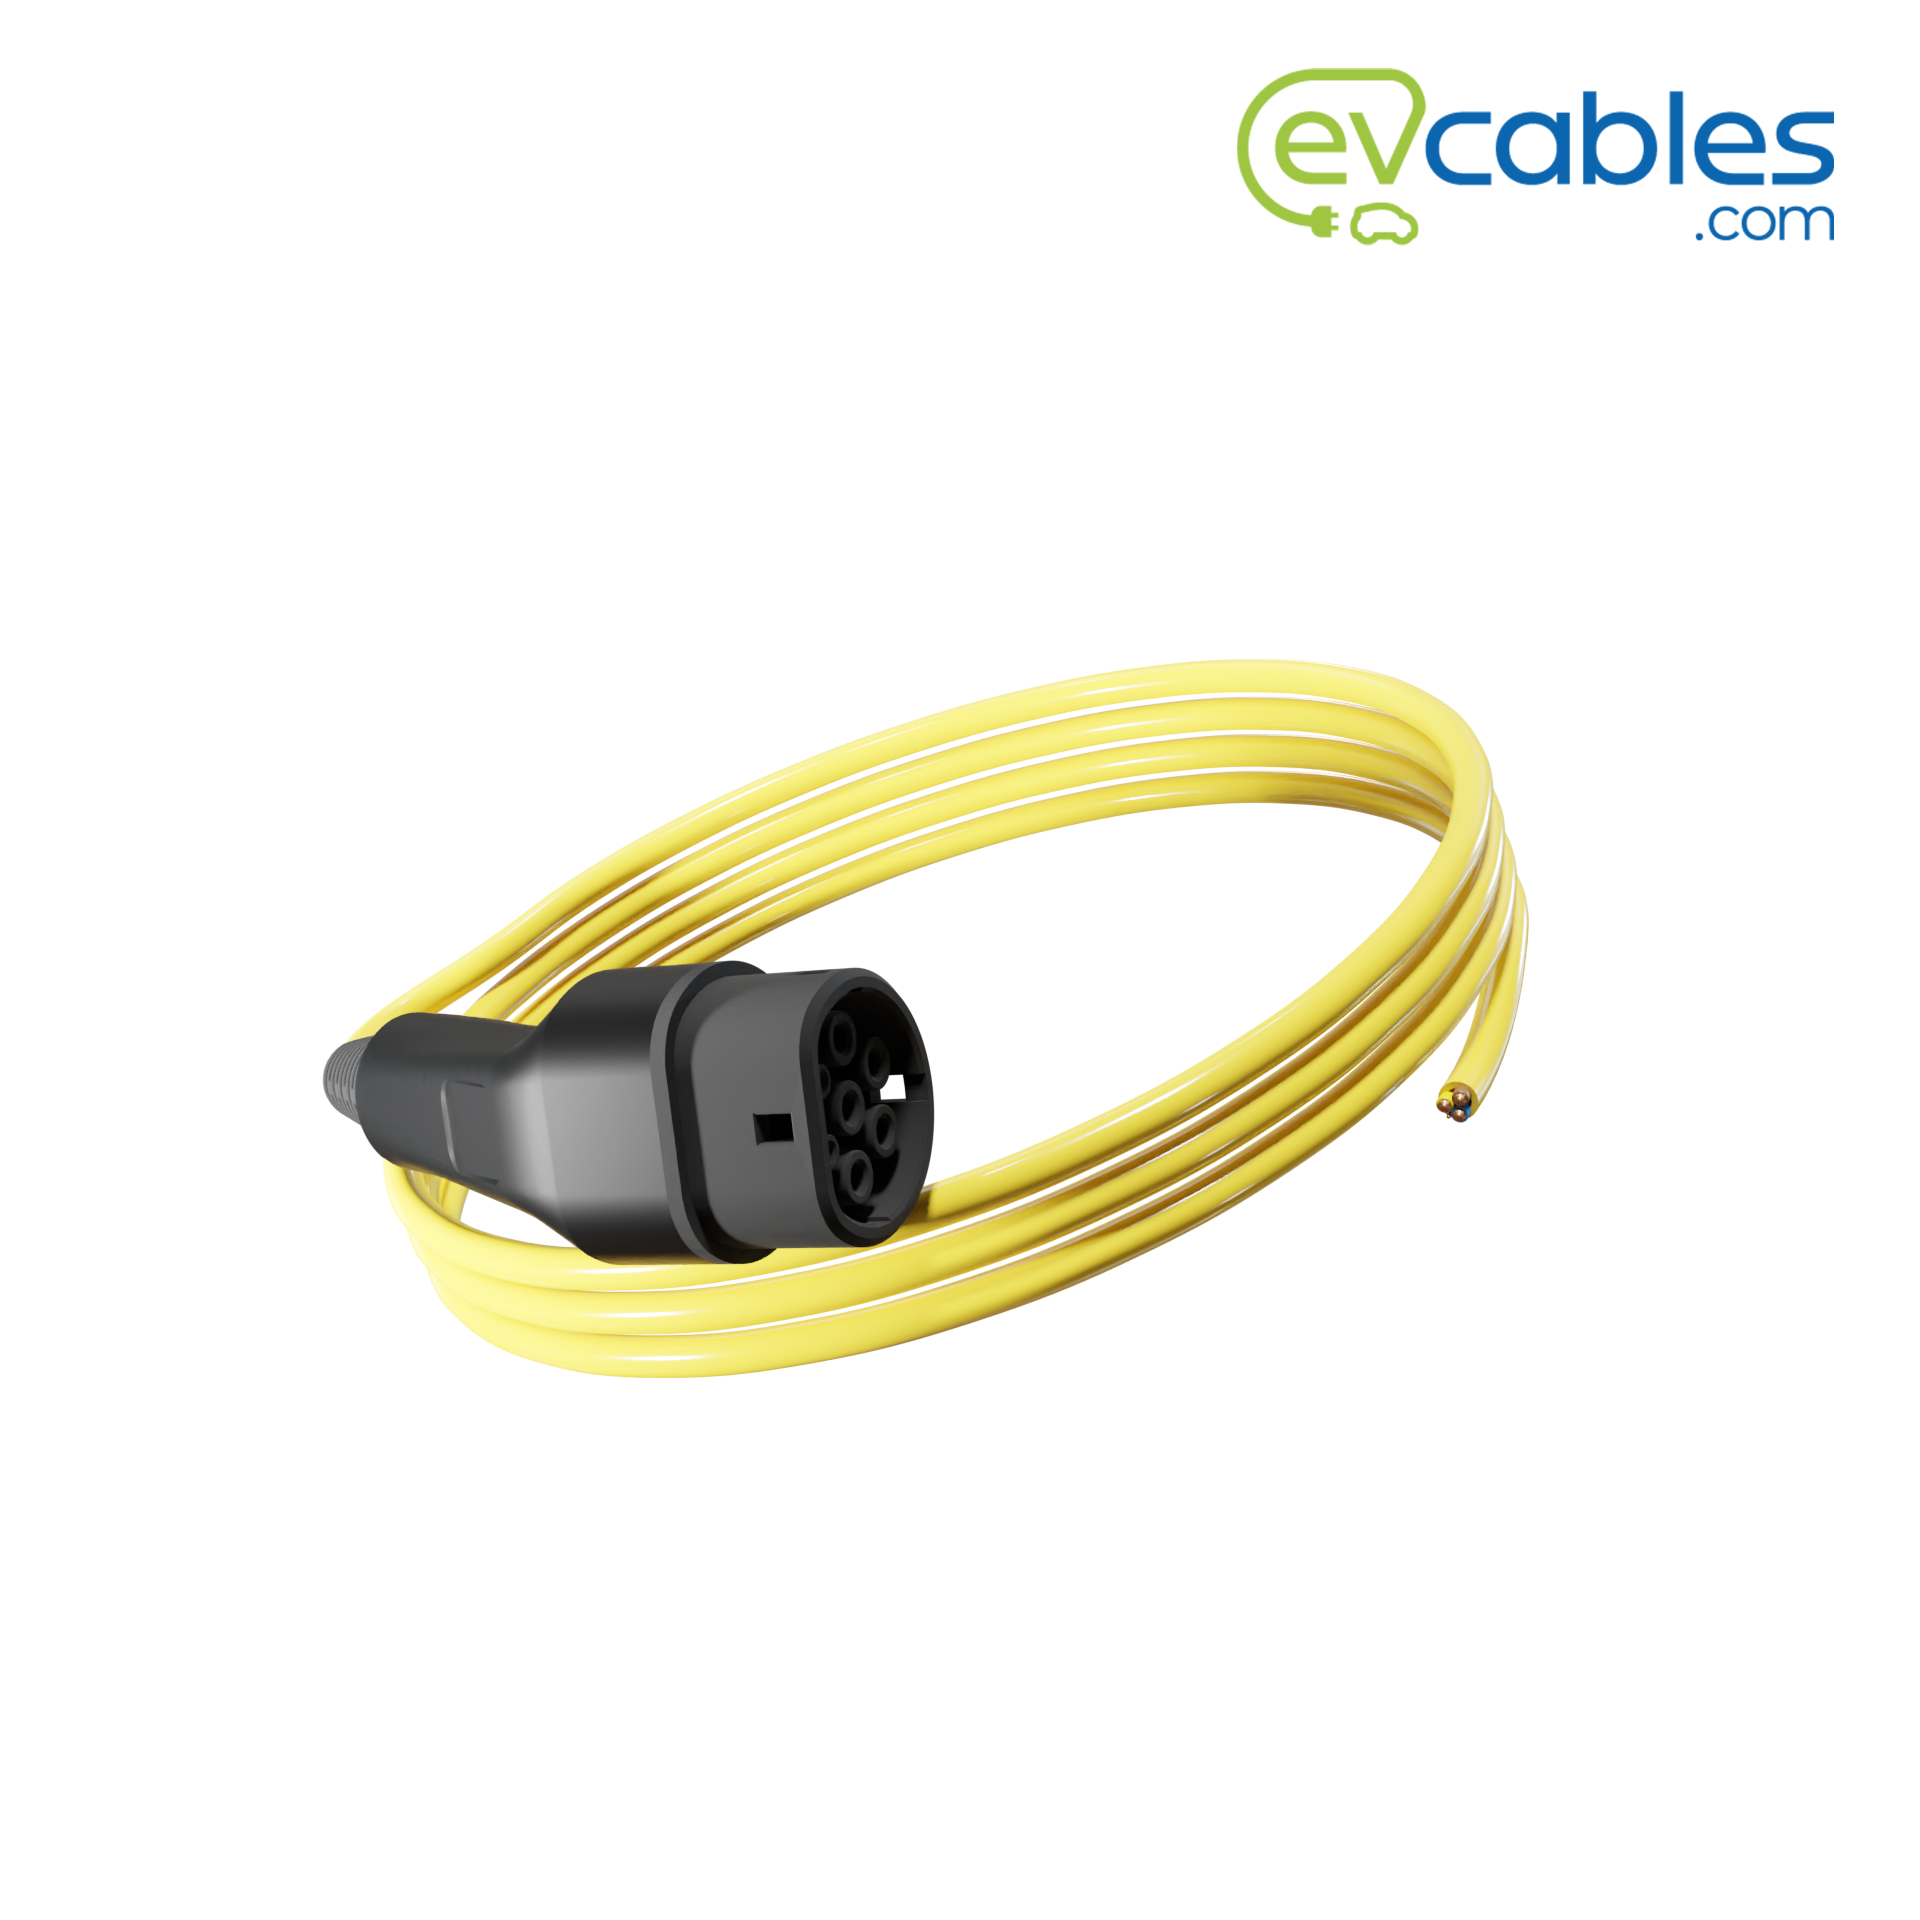 Genesis GV60 Sport Plus Charging Cables